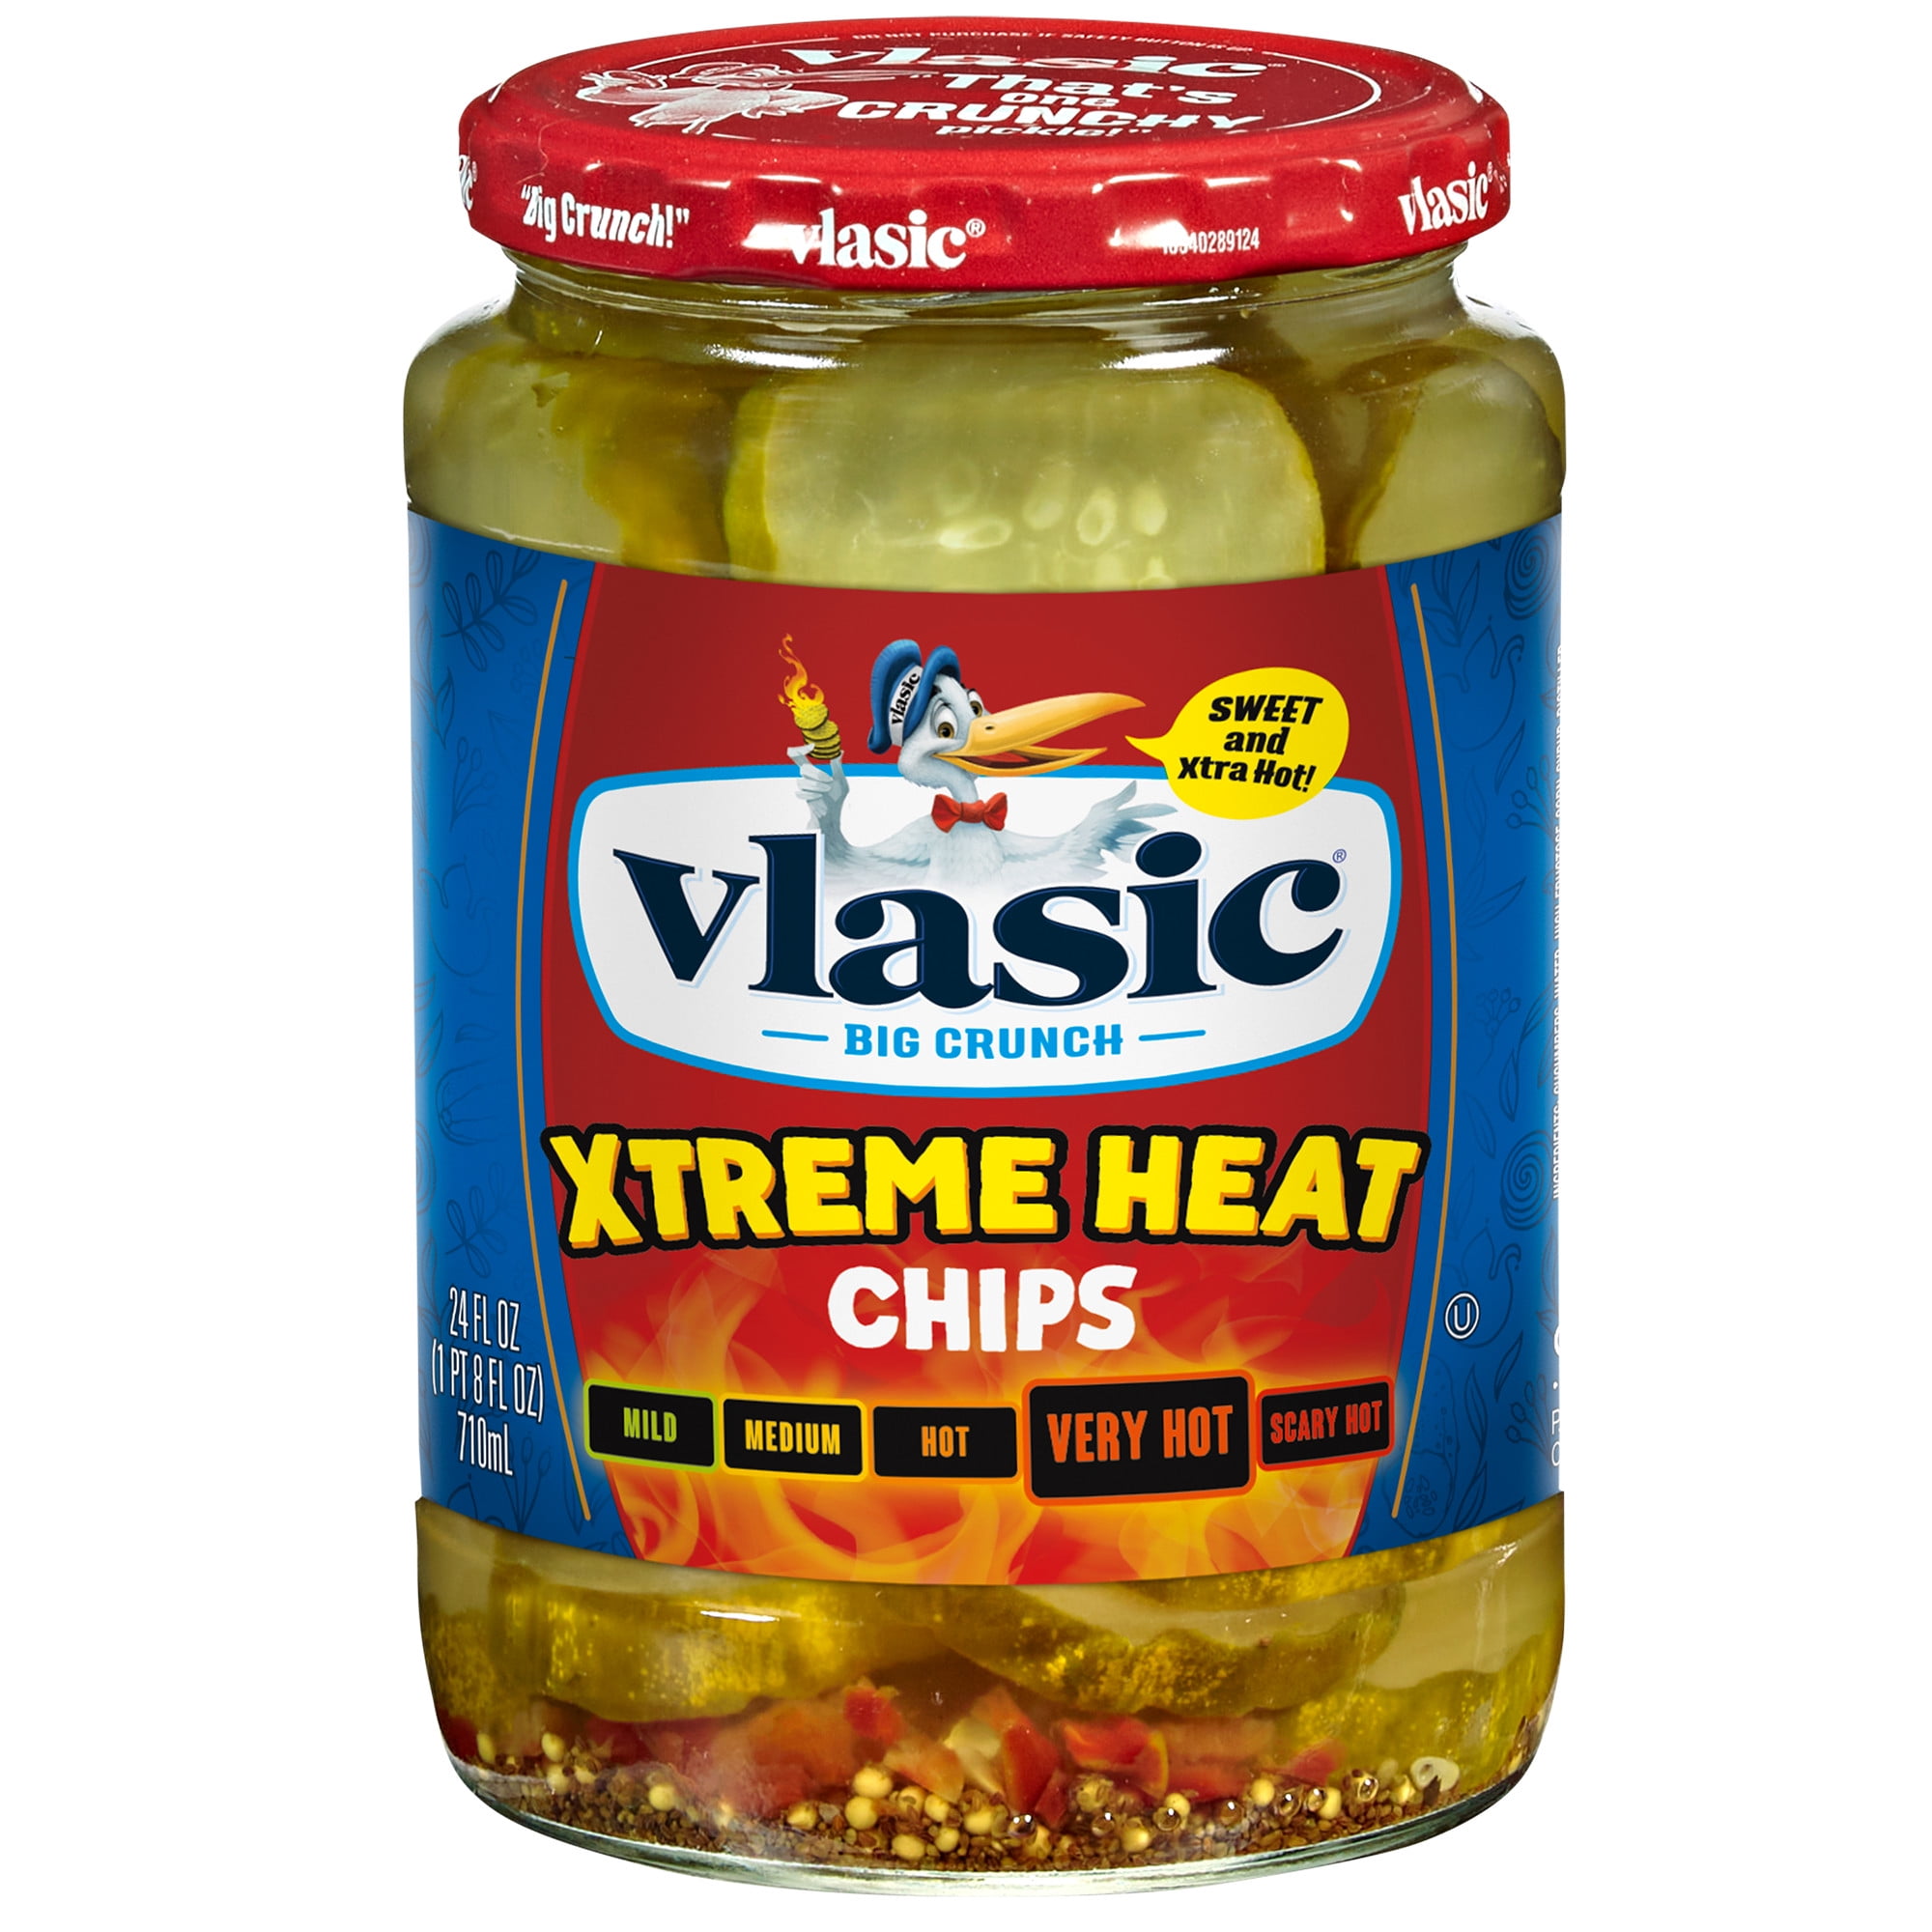 Vlasic-Xtreme-Heat-Pickle-Chips-Very-Hot-Spice-24-oz_ea939182-4dad-4b33-8492-79318950c290.8a212e086f54886b7efb76f1e839157b.jpeg